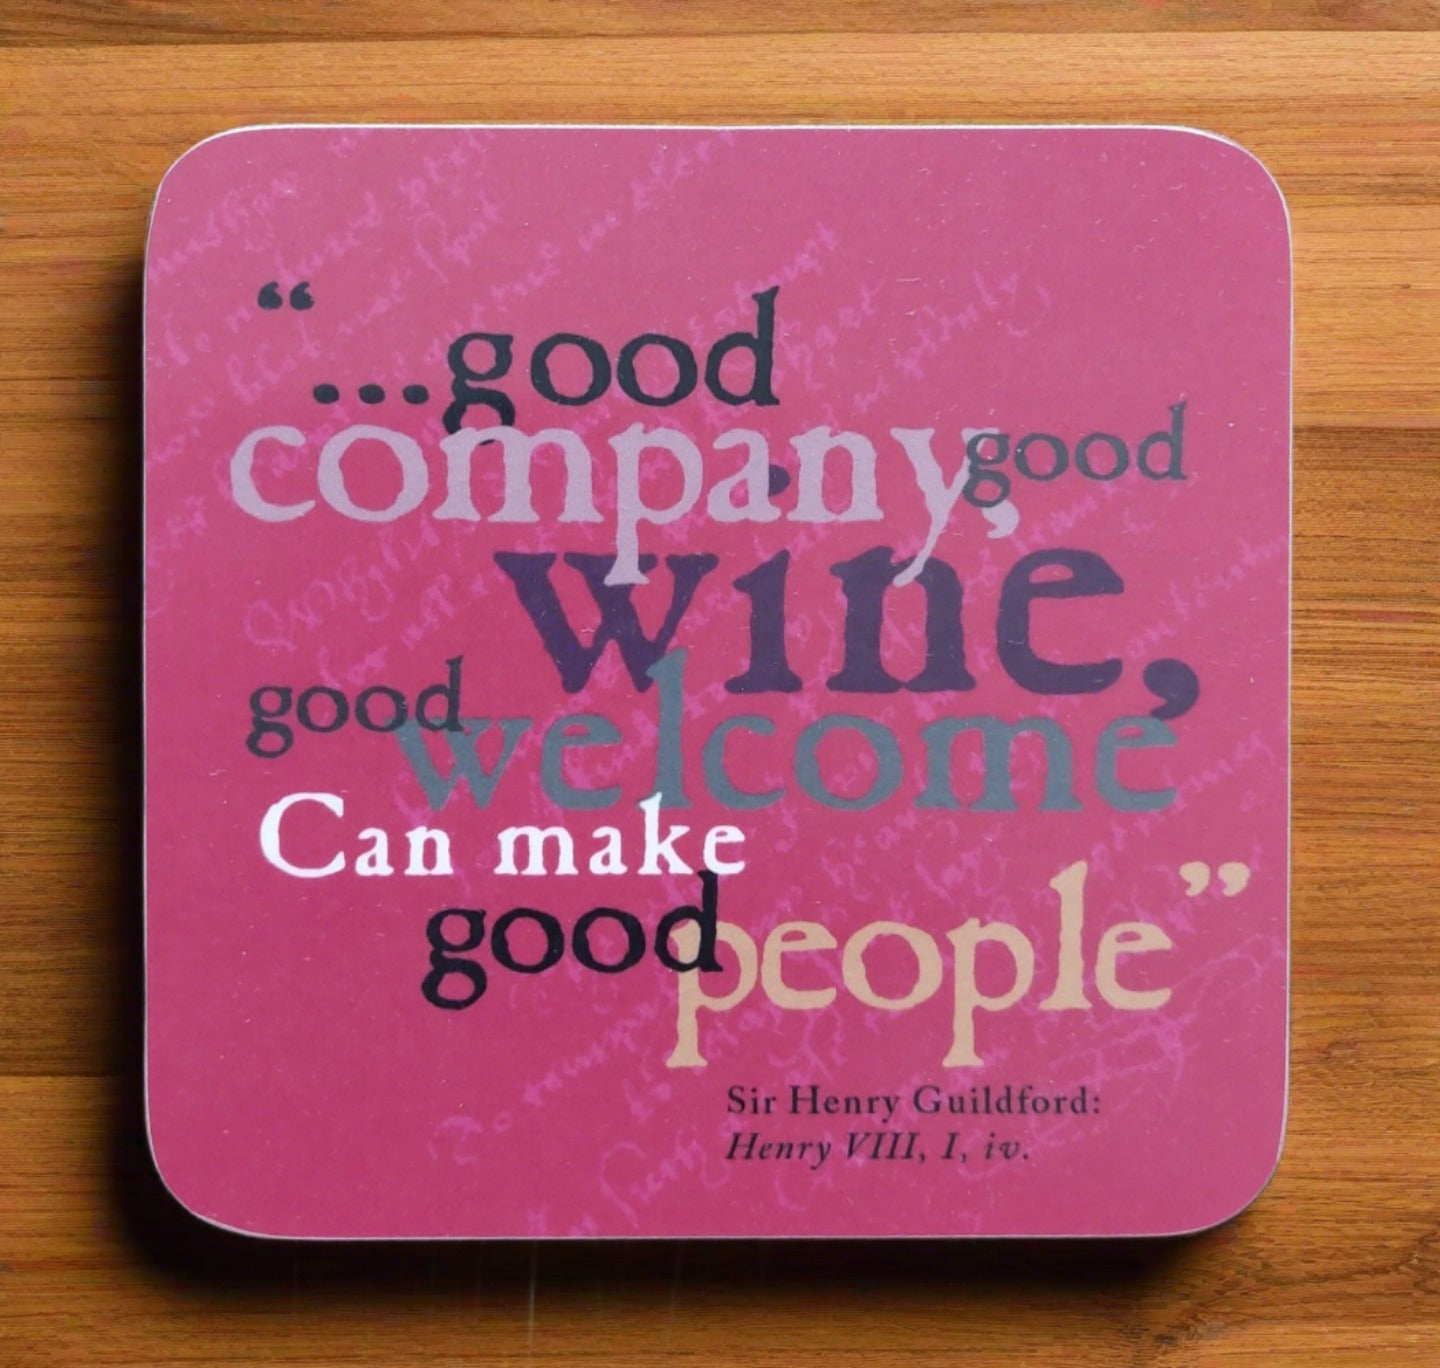 Coaster: Good Company, Good Wine